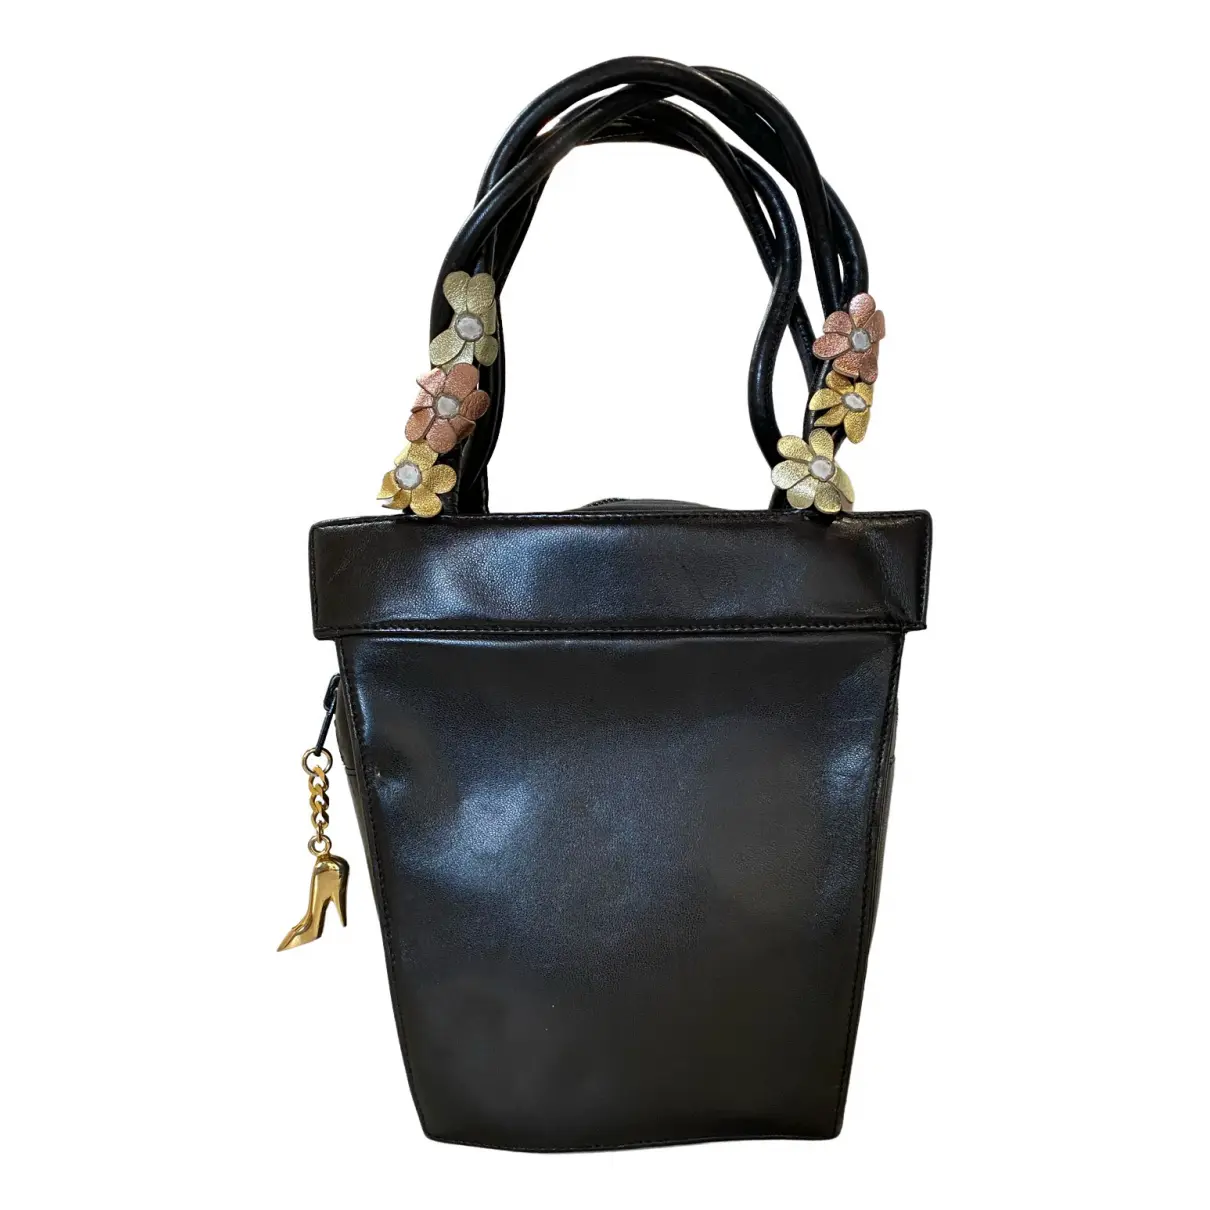 Leather handbag Ombeline by Maud Frizon